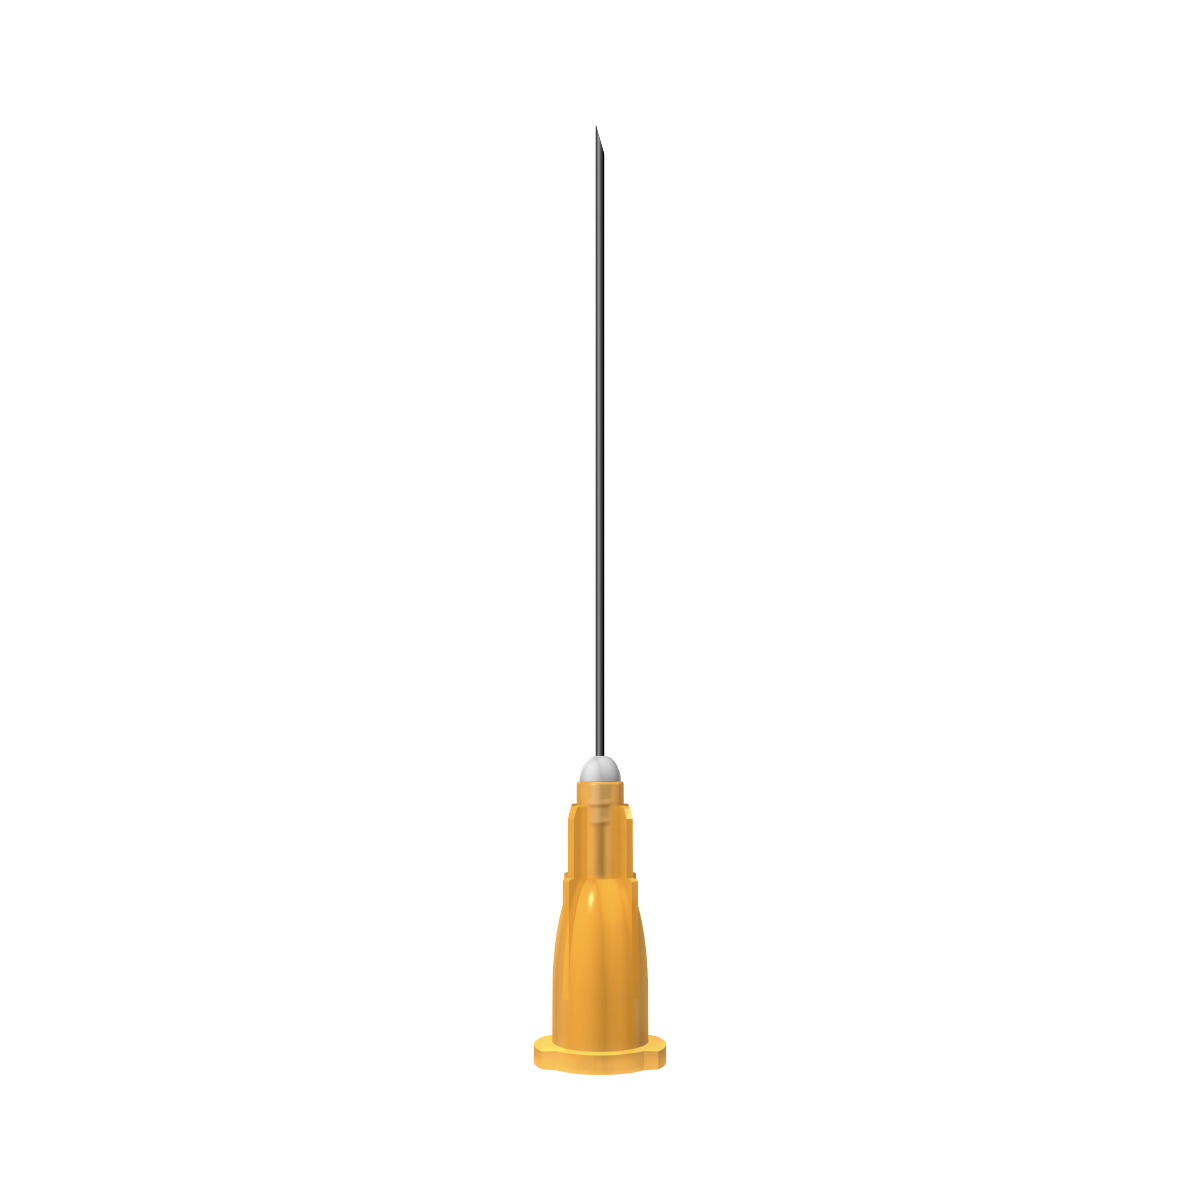 Unisharp: Orange 25G 38mm (1½  inch) needle